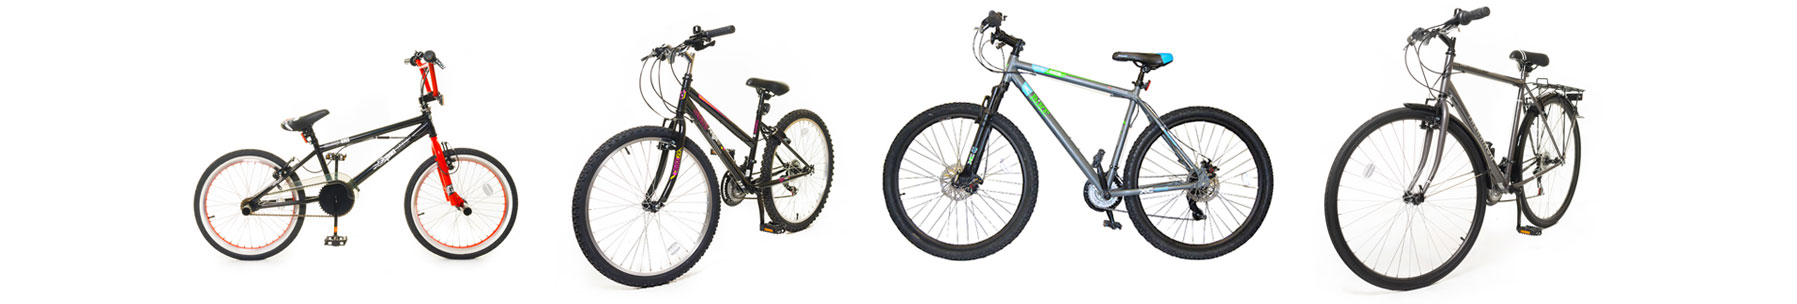 Bicycles and E-Bikes Range